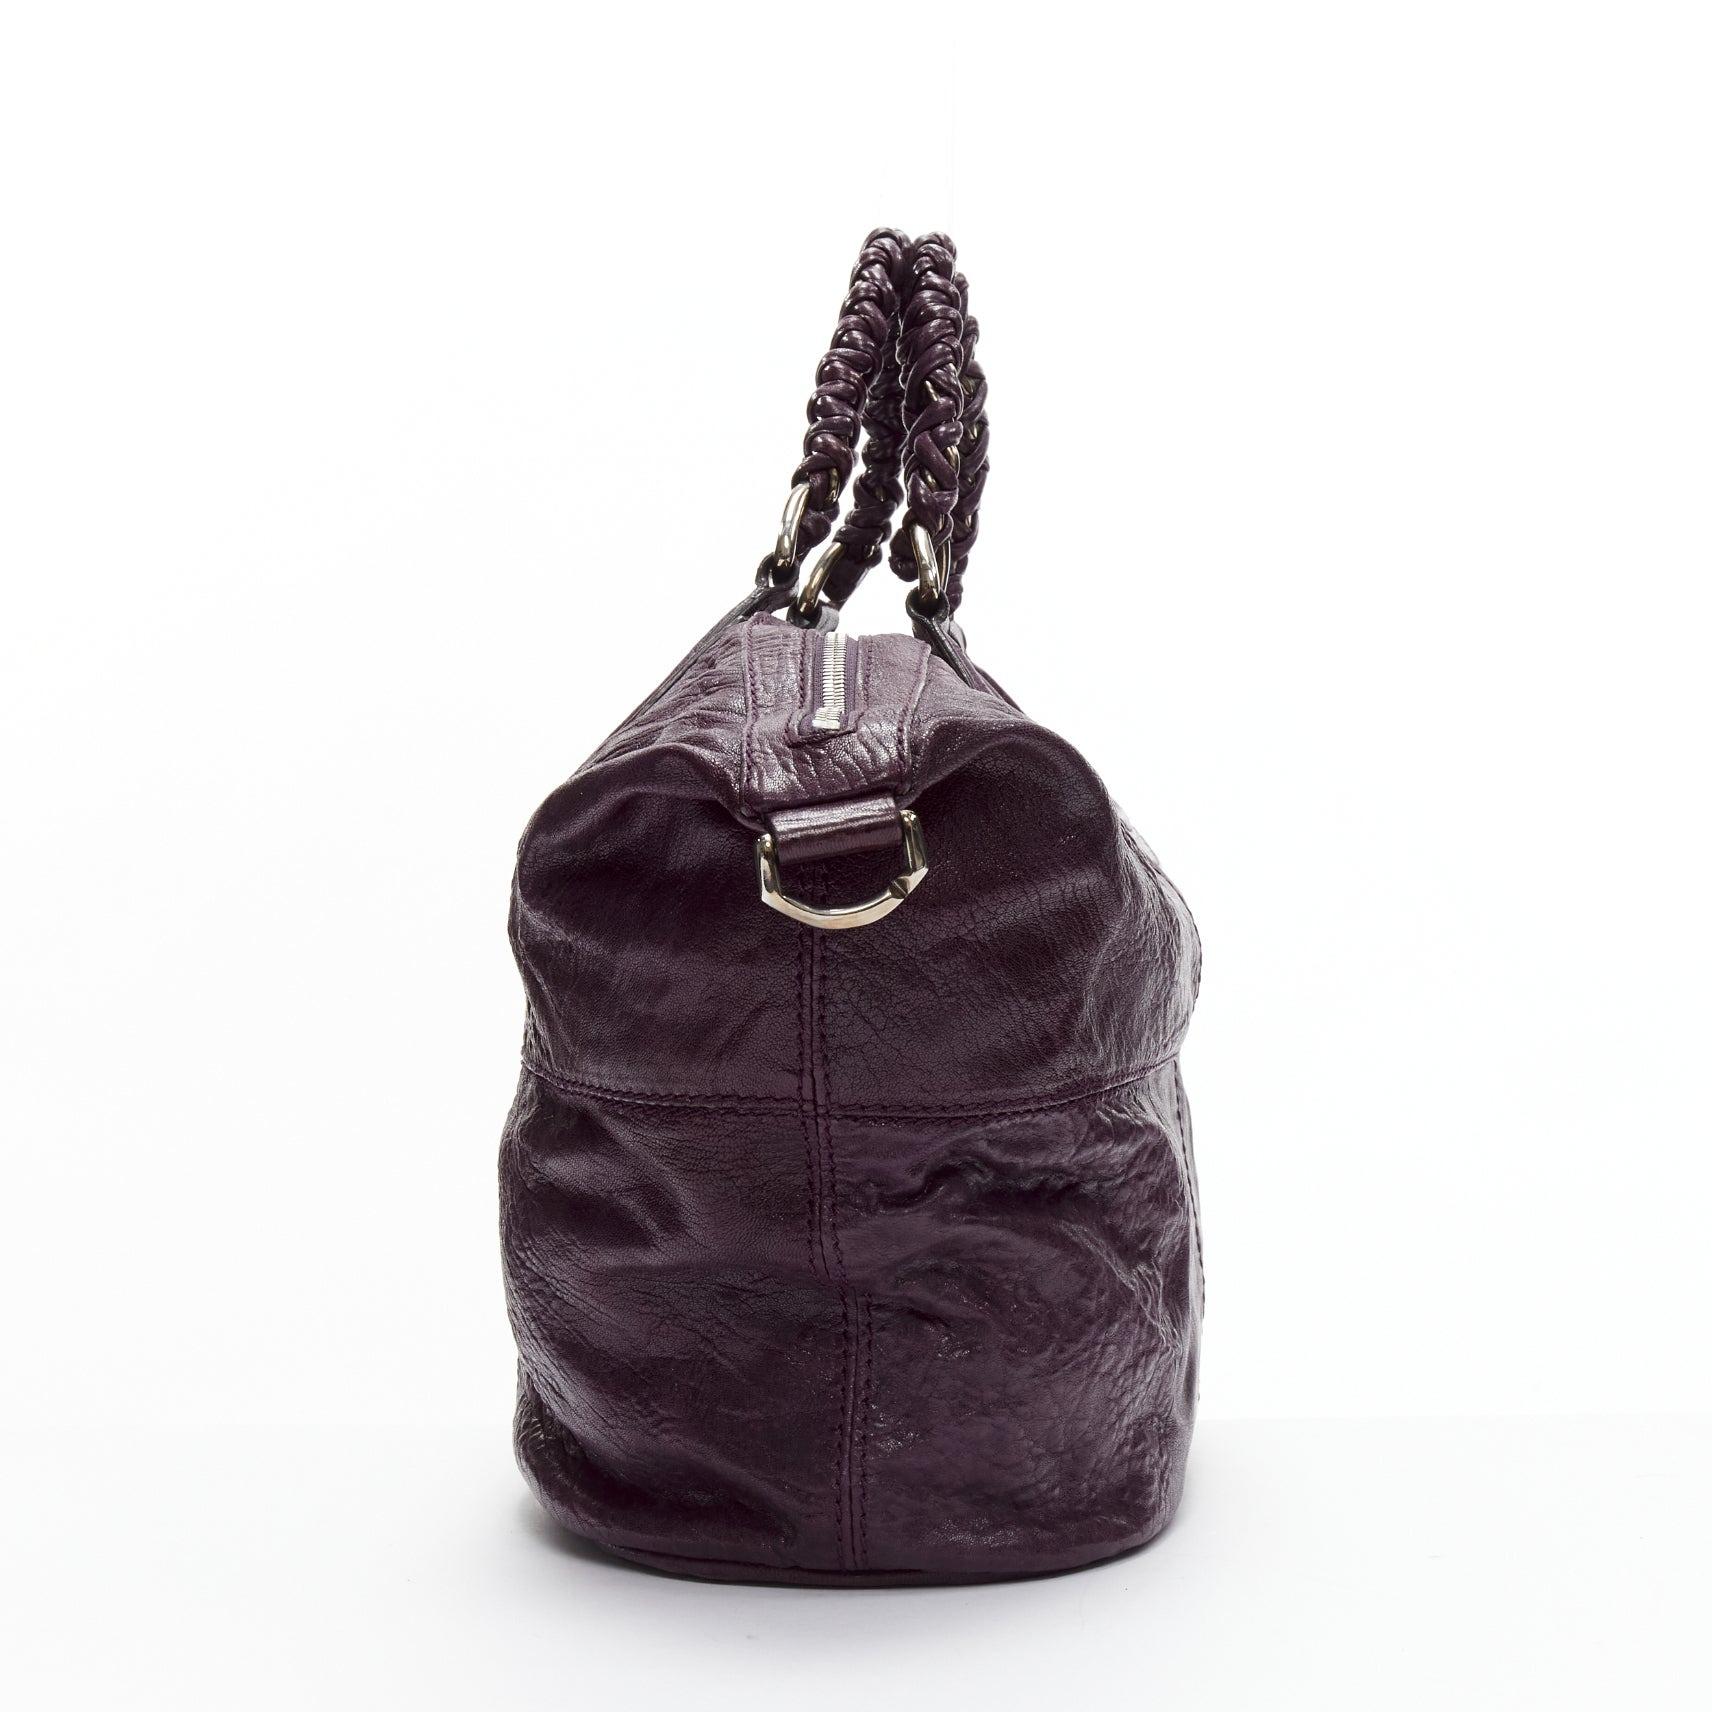 Women's GIVENCHY Nightingale dark purple leather SHW top handle satchel bag